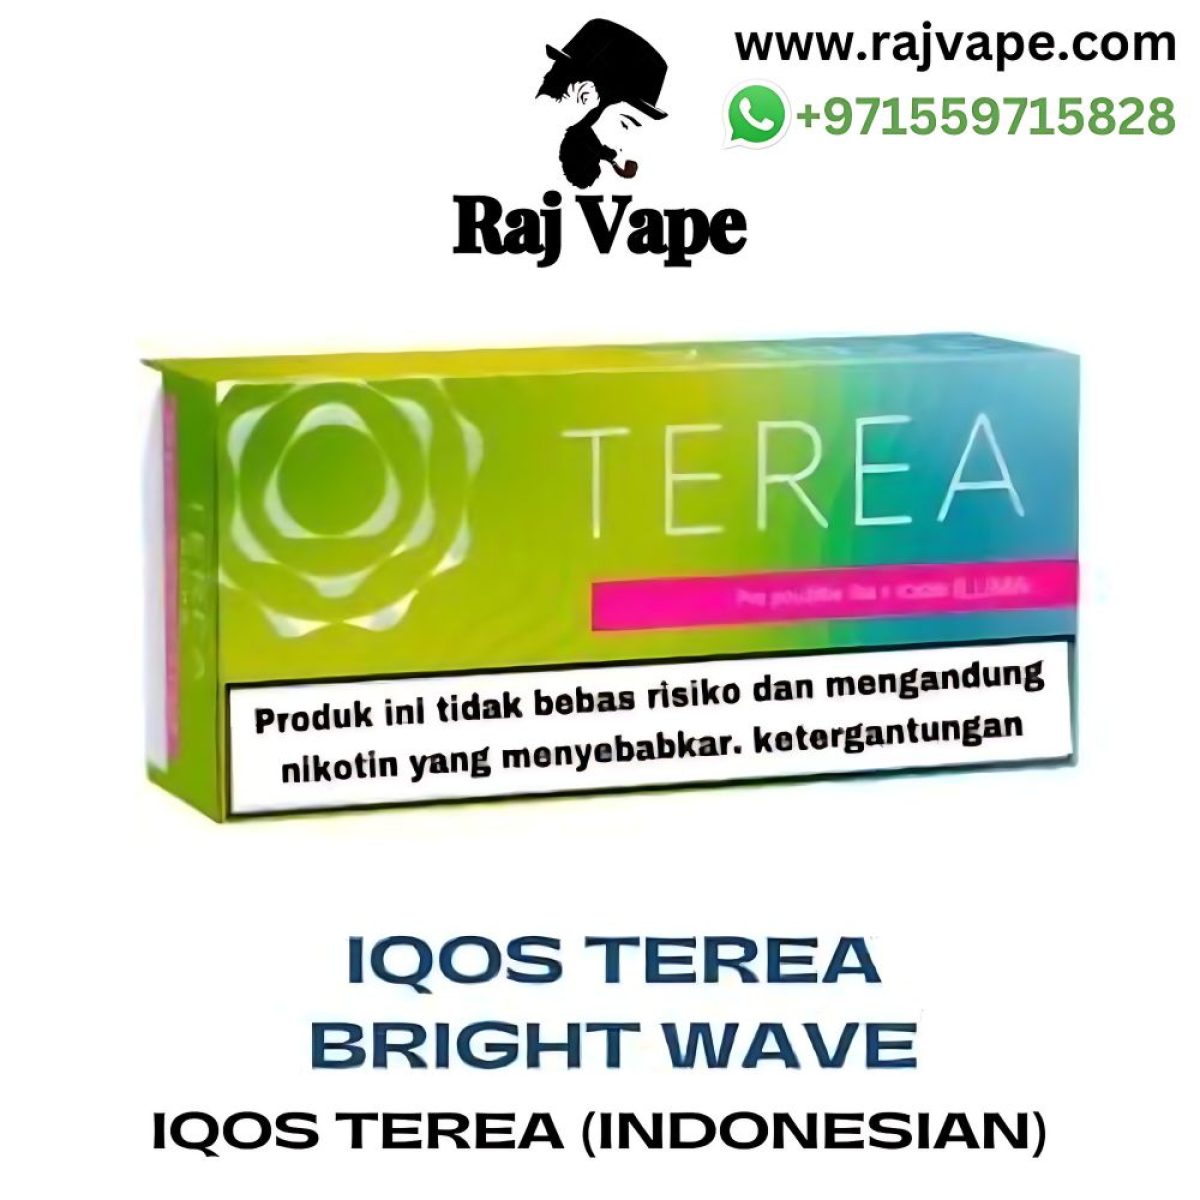 Buy IQOS TEREA Bright Wave (Indonesia) in Dubai